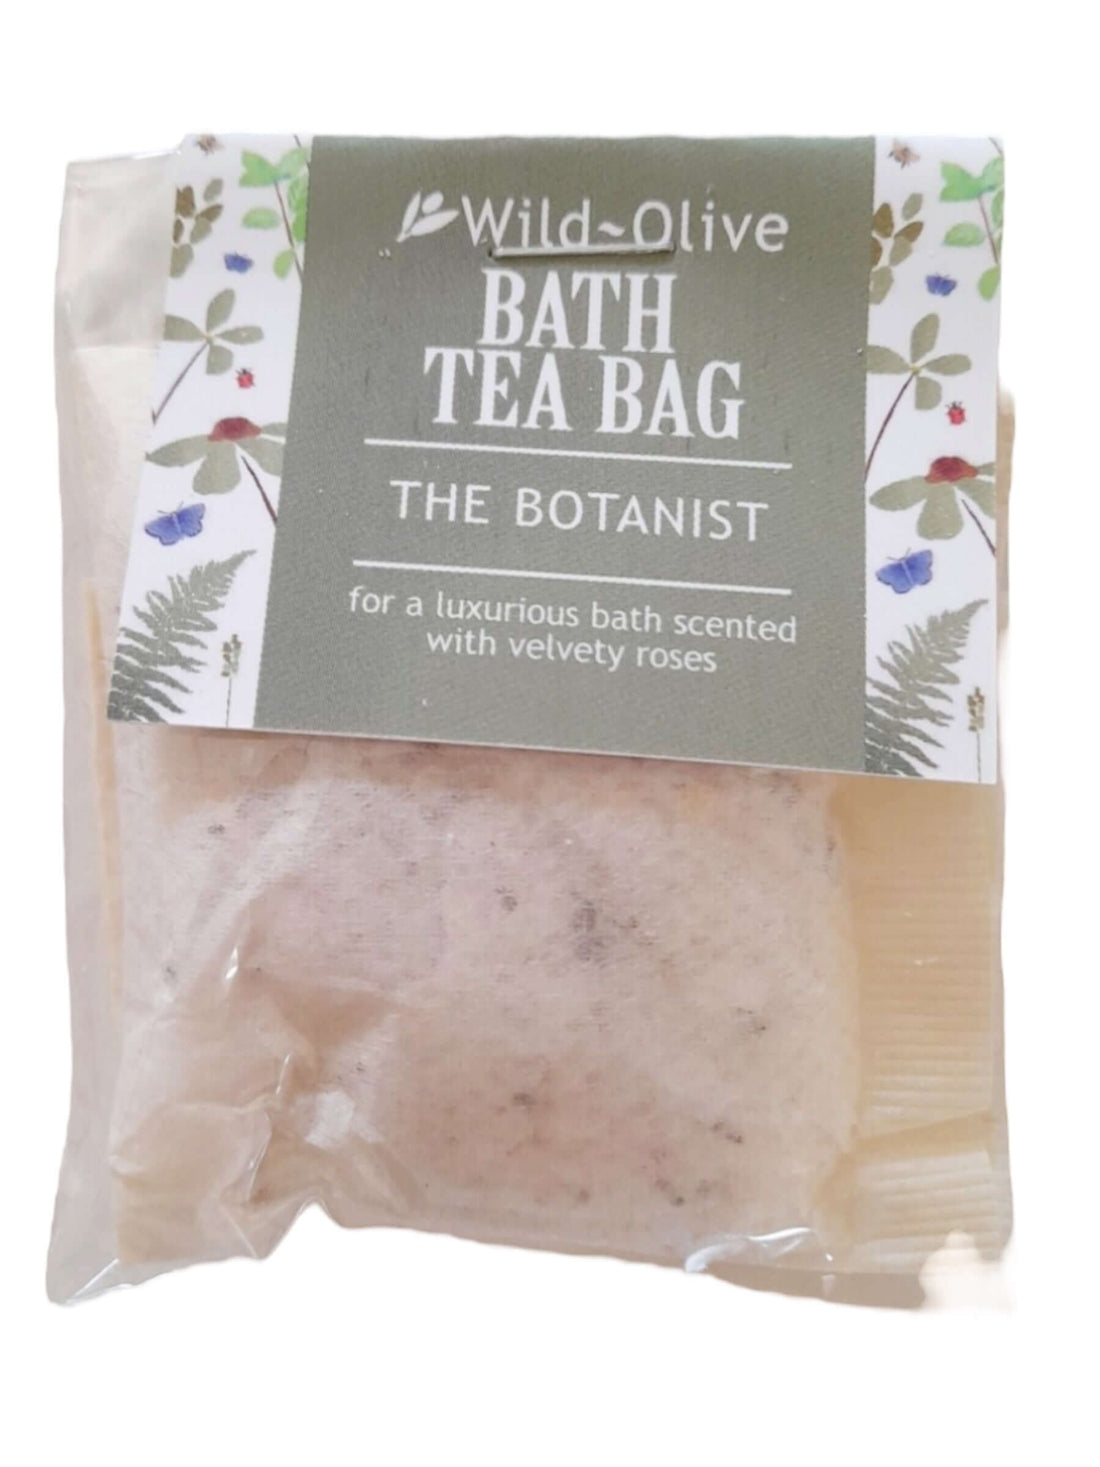 The Botanist Bath Tea Bag